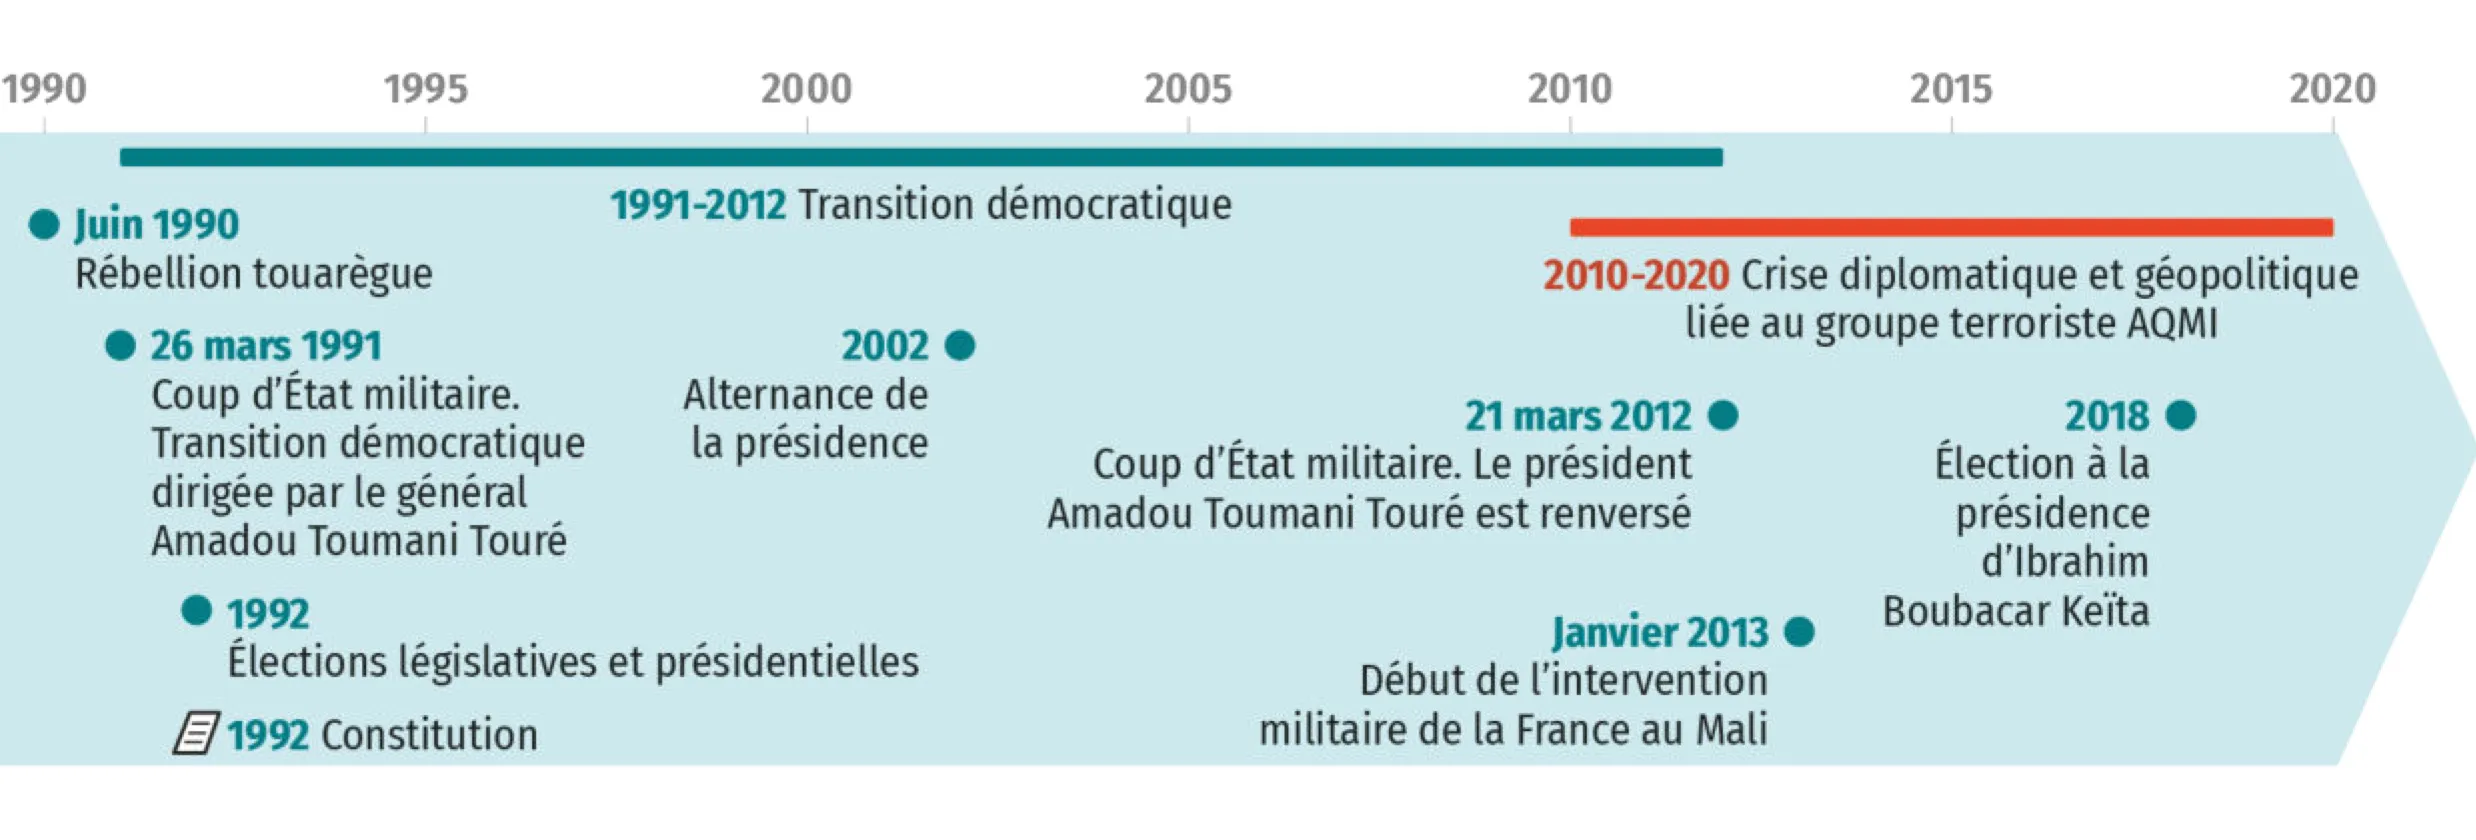 Une transition démocratique progressive : Le Mali